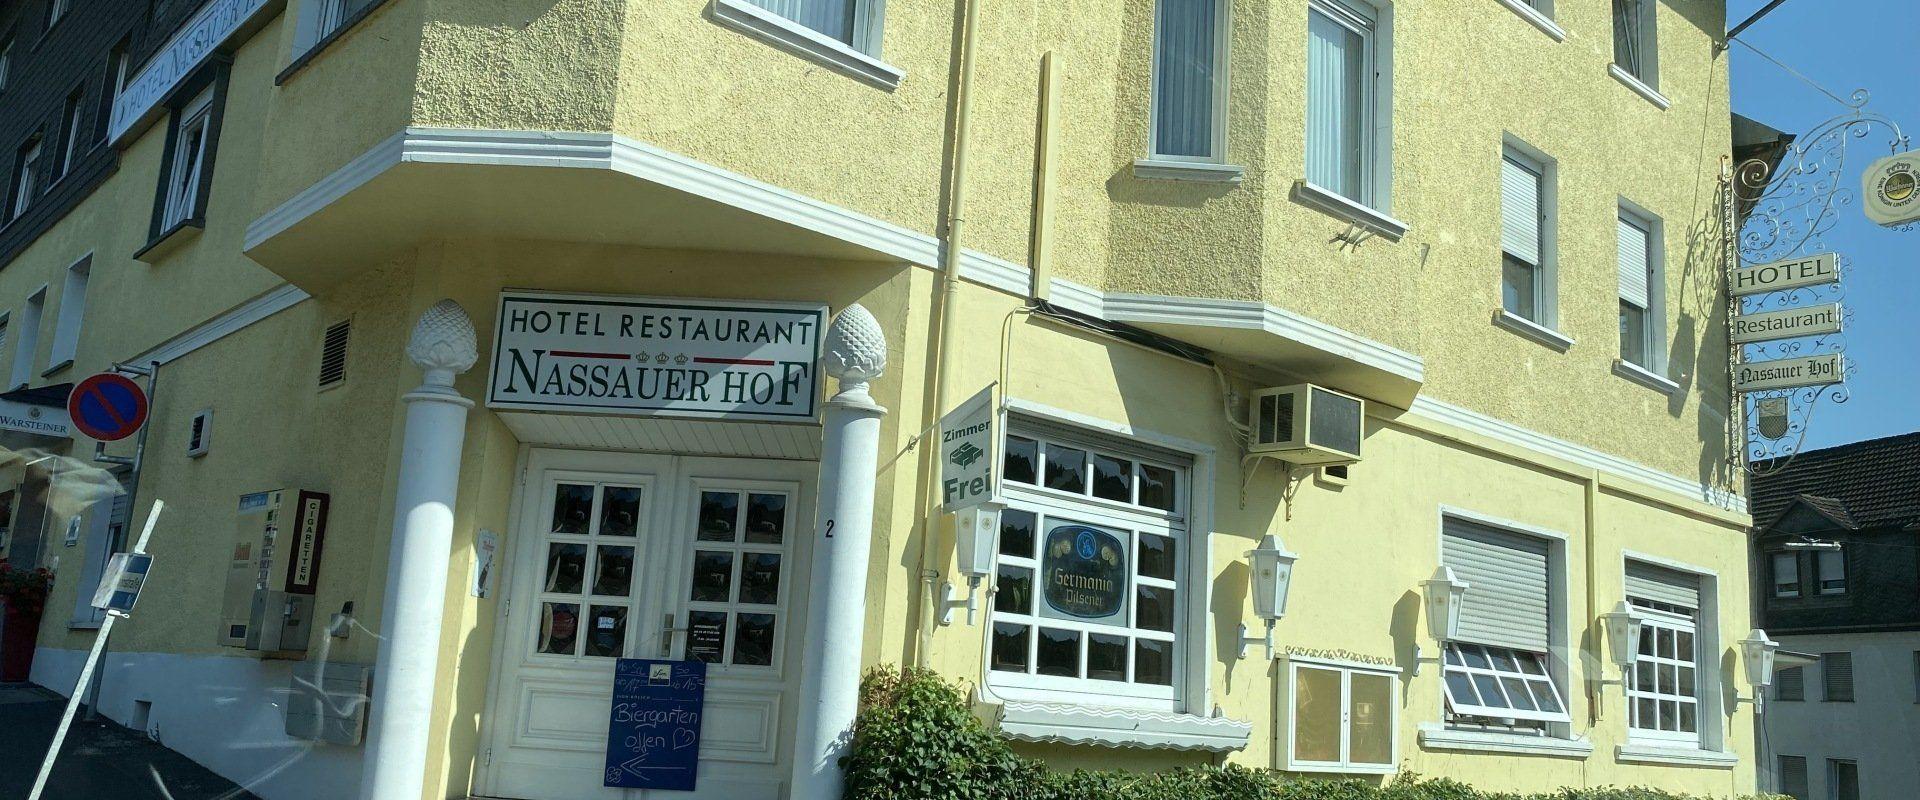 12830 Hotel Nassauer Hof Hausansicht.jpeg